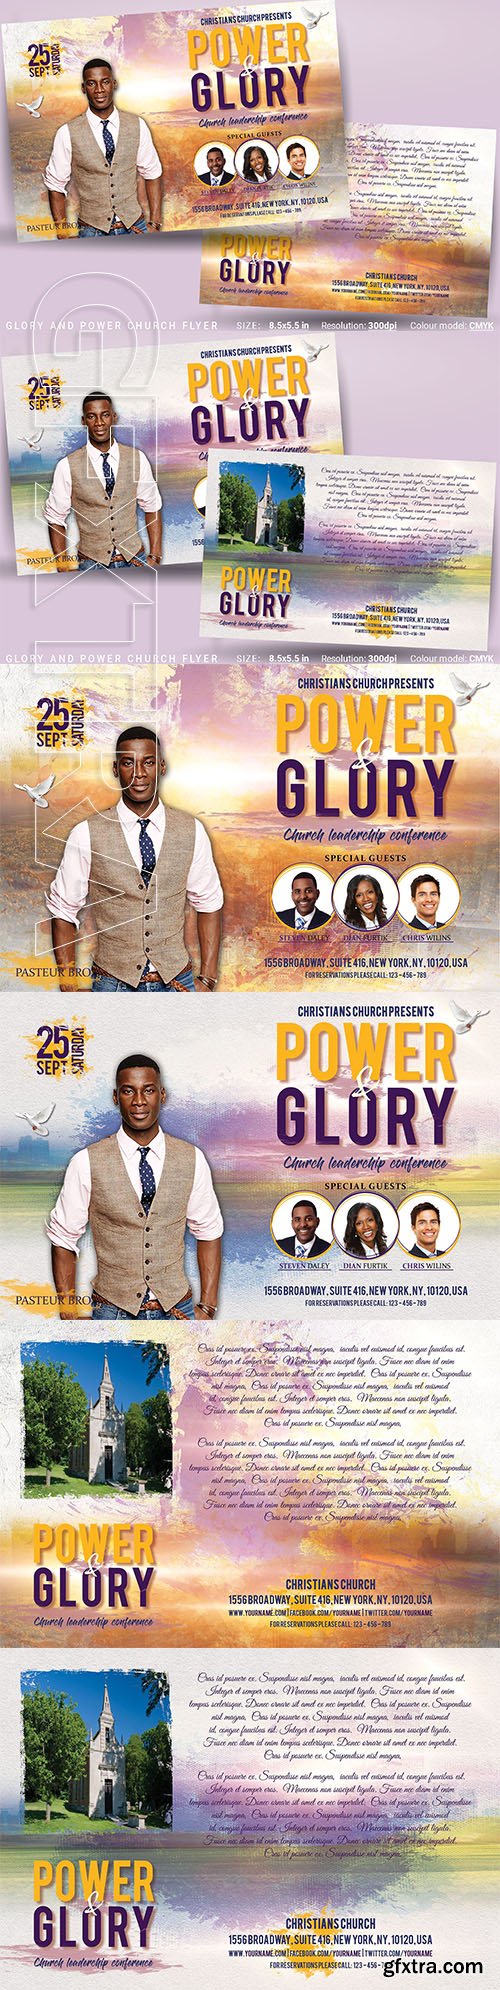 CreativeMarket - Glory And Power Church Flyer 3156030